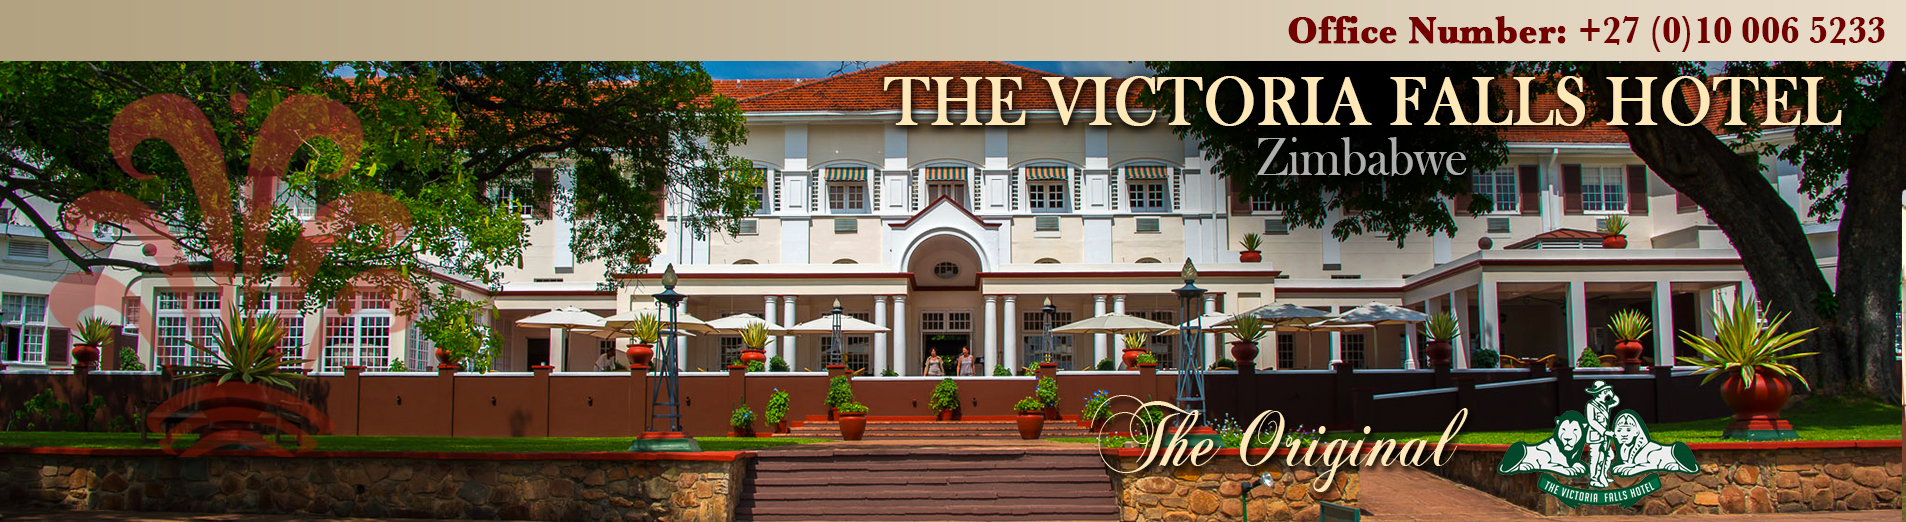 Victoria Falls Hotel Zimbabwe